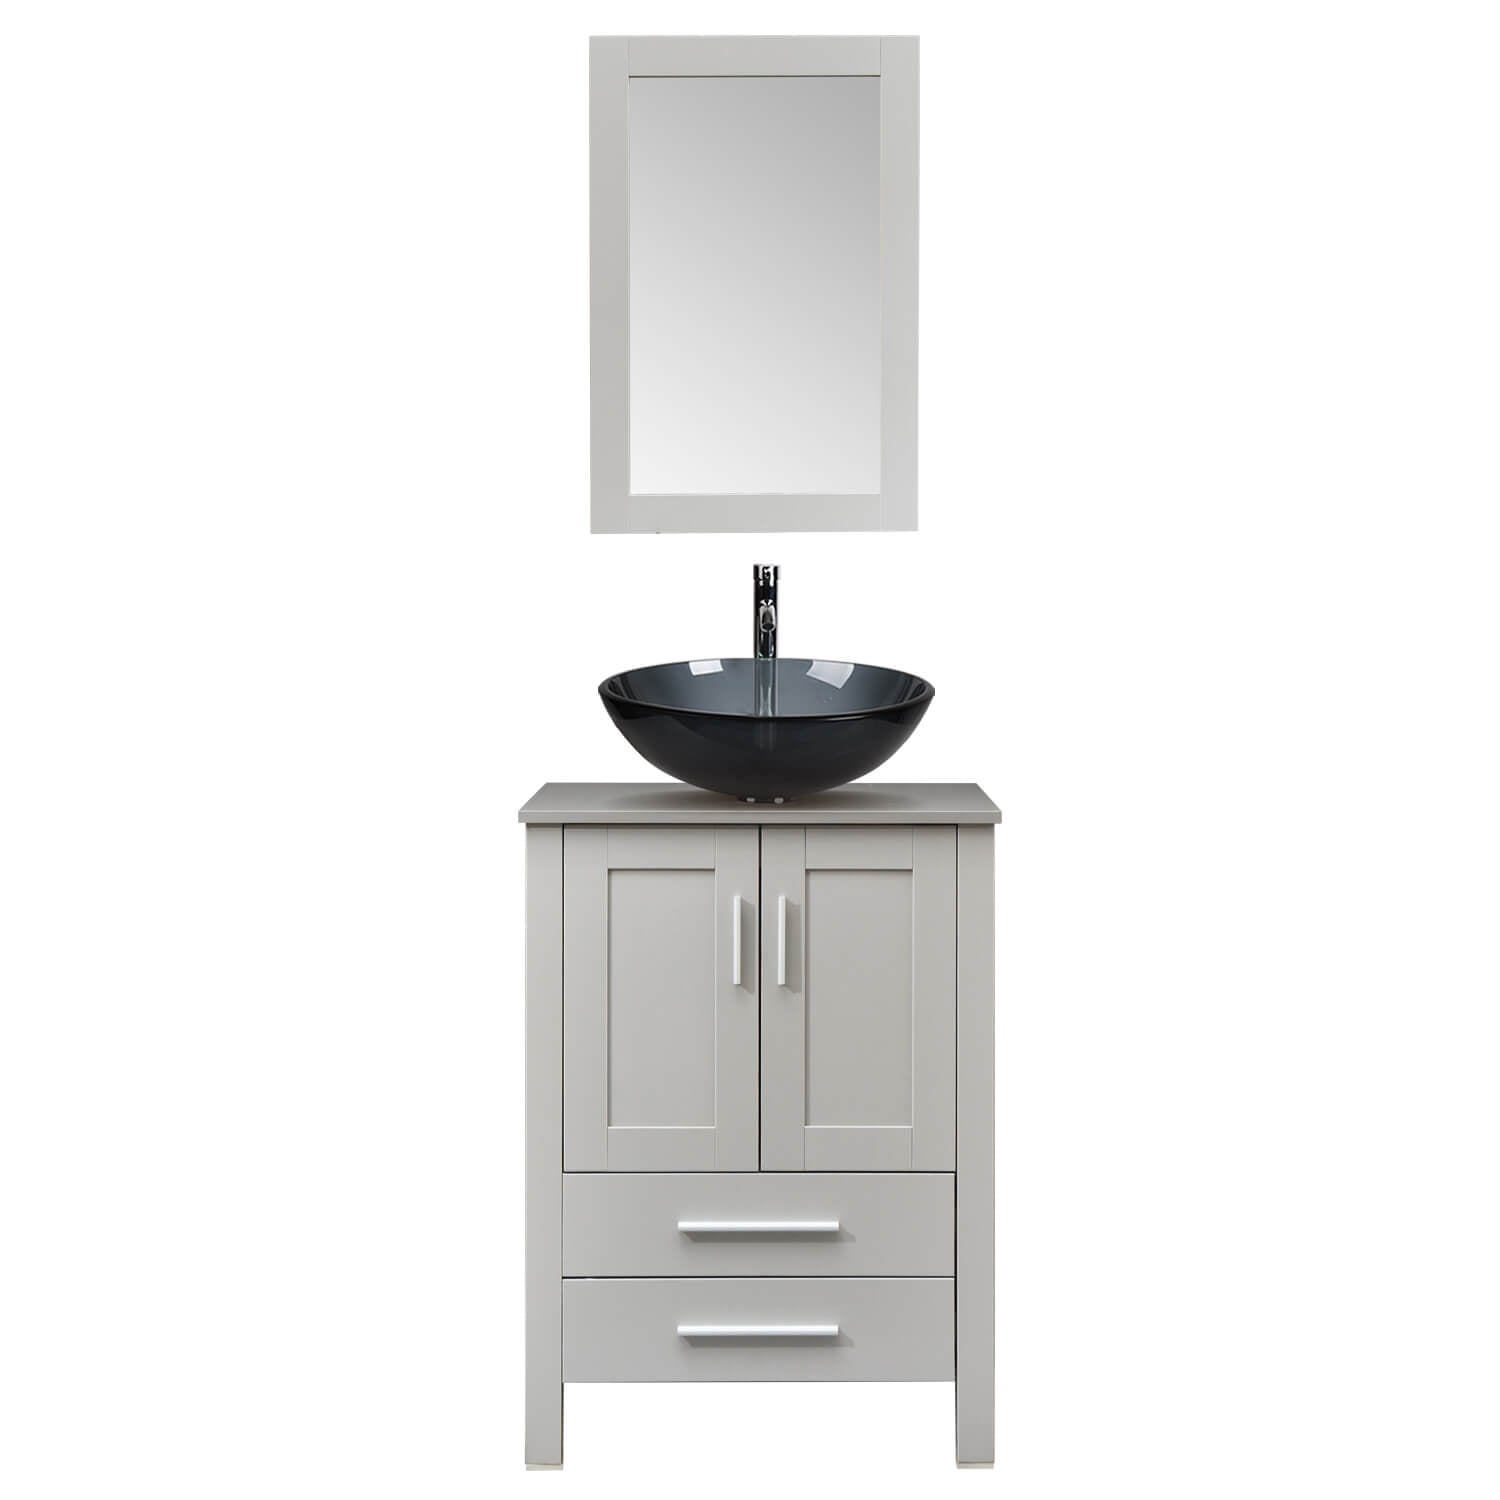 Elecwish gray wood bathroom vanity with bluish grey glass sink BG003 in white background